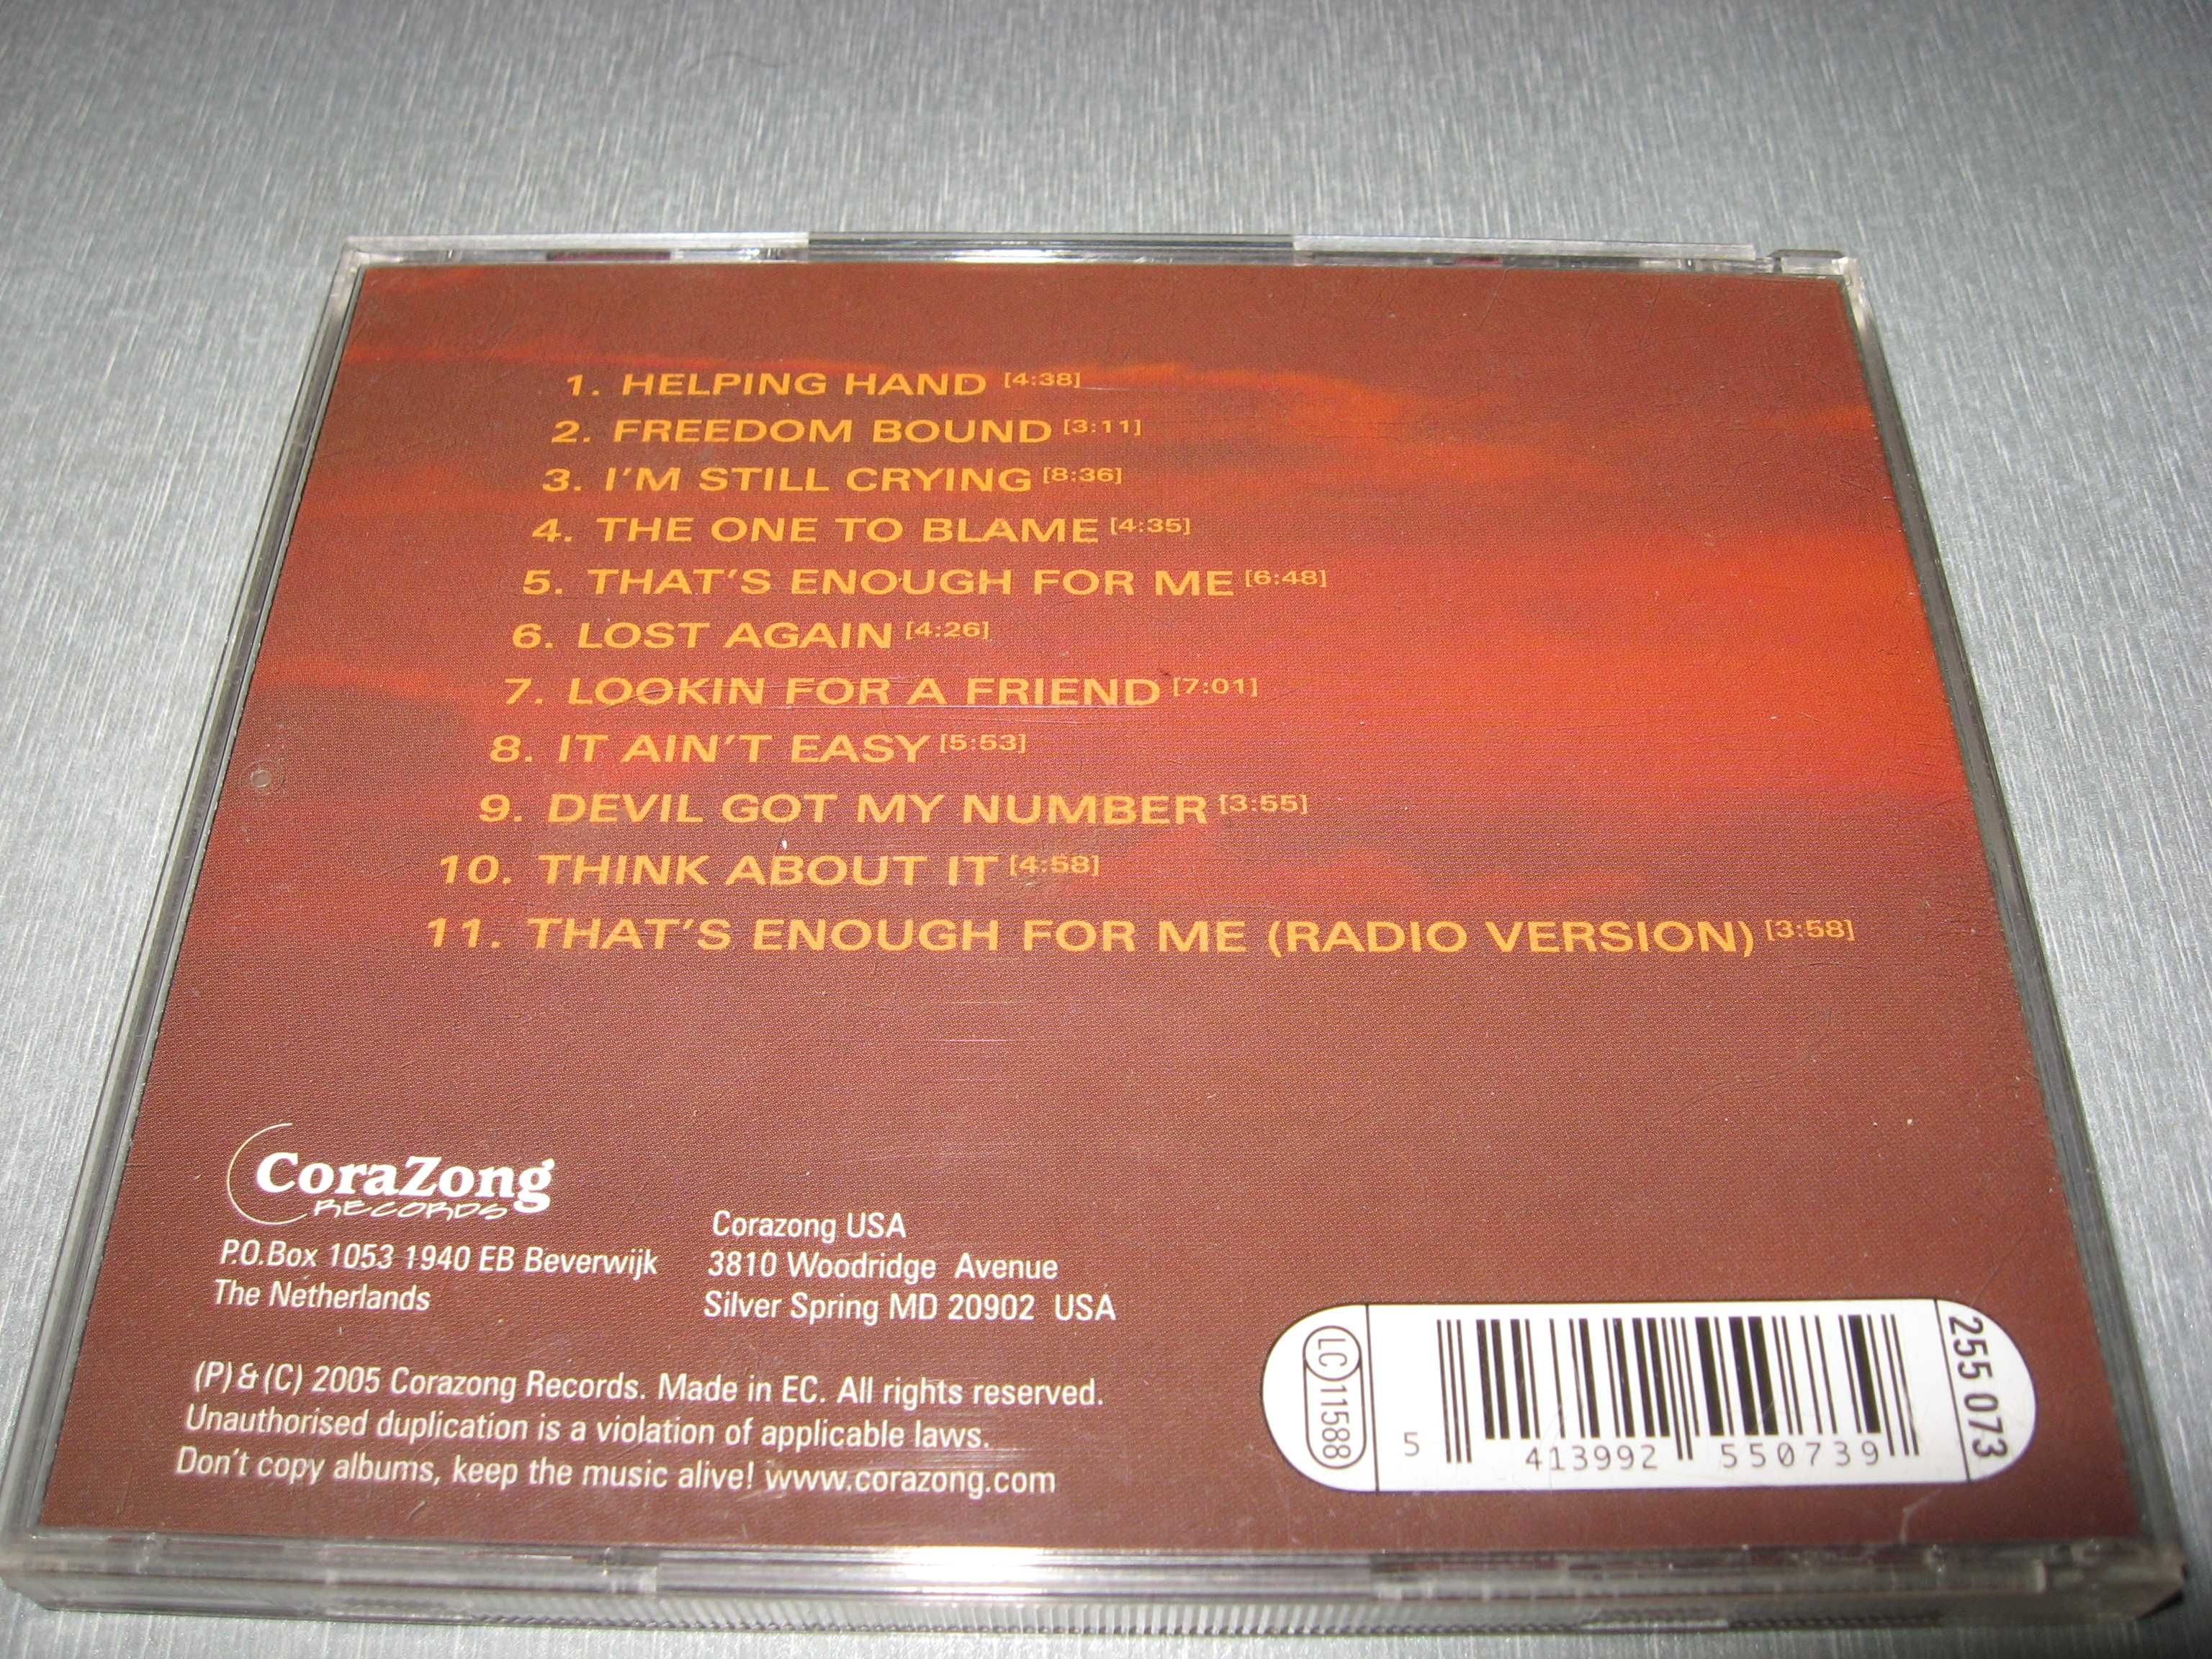 Julian Sas "Twilight Skies Of Life" CD made in USA оригинал 2005г.